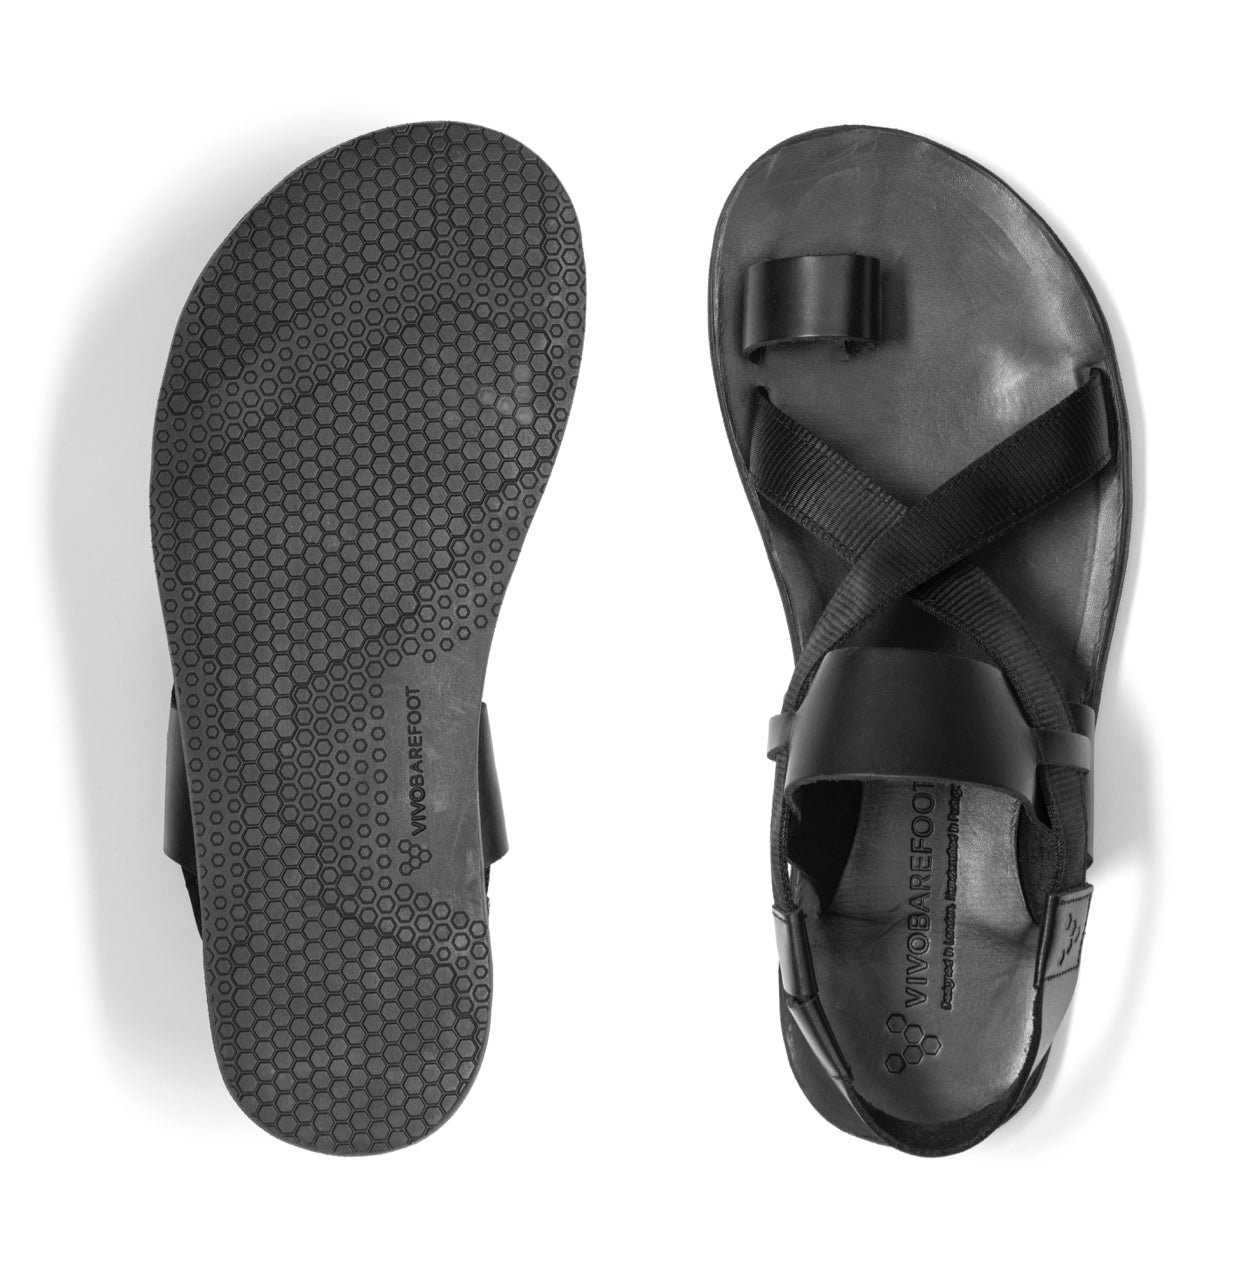 Vivo Barefoot Kuru Sandal, Tan | Sandals, Bare foot sandals, Barefoot